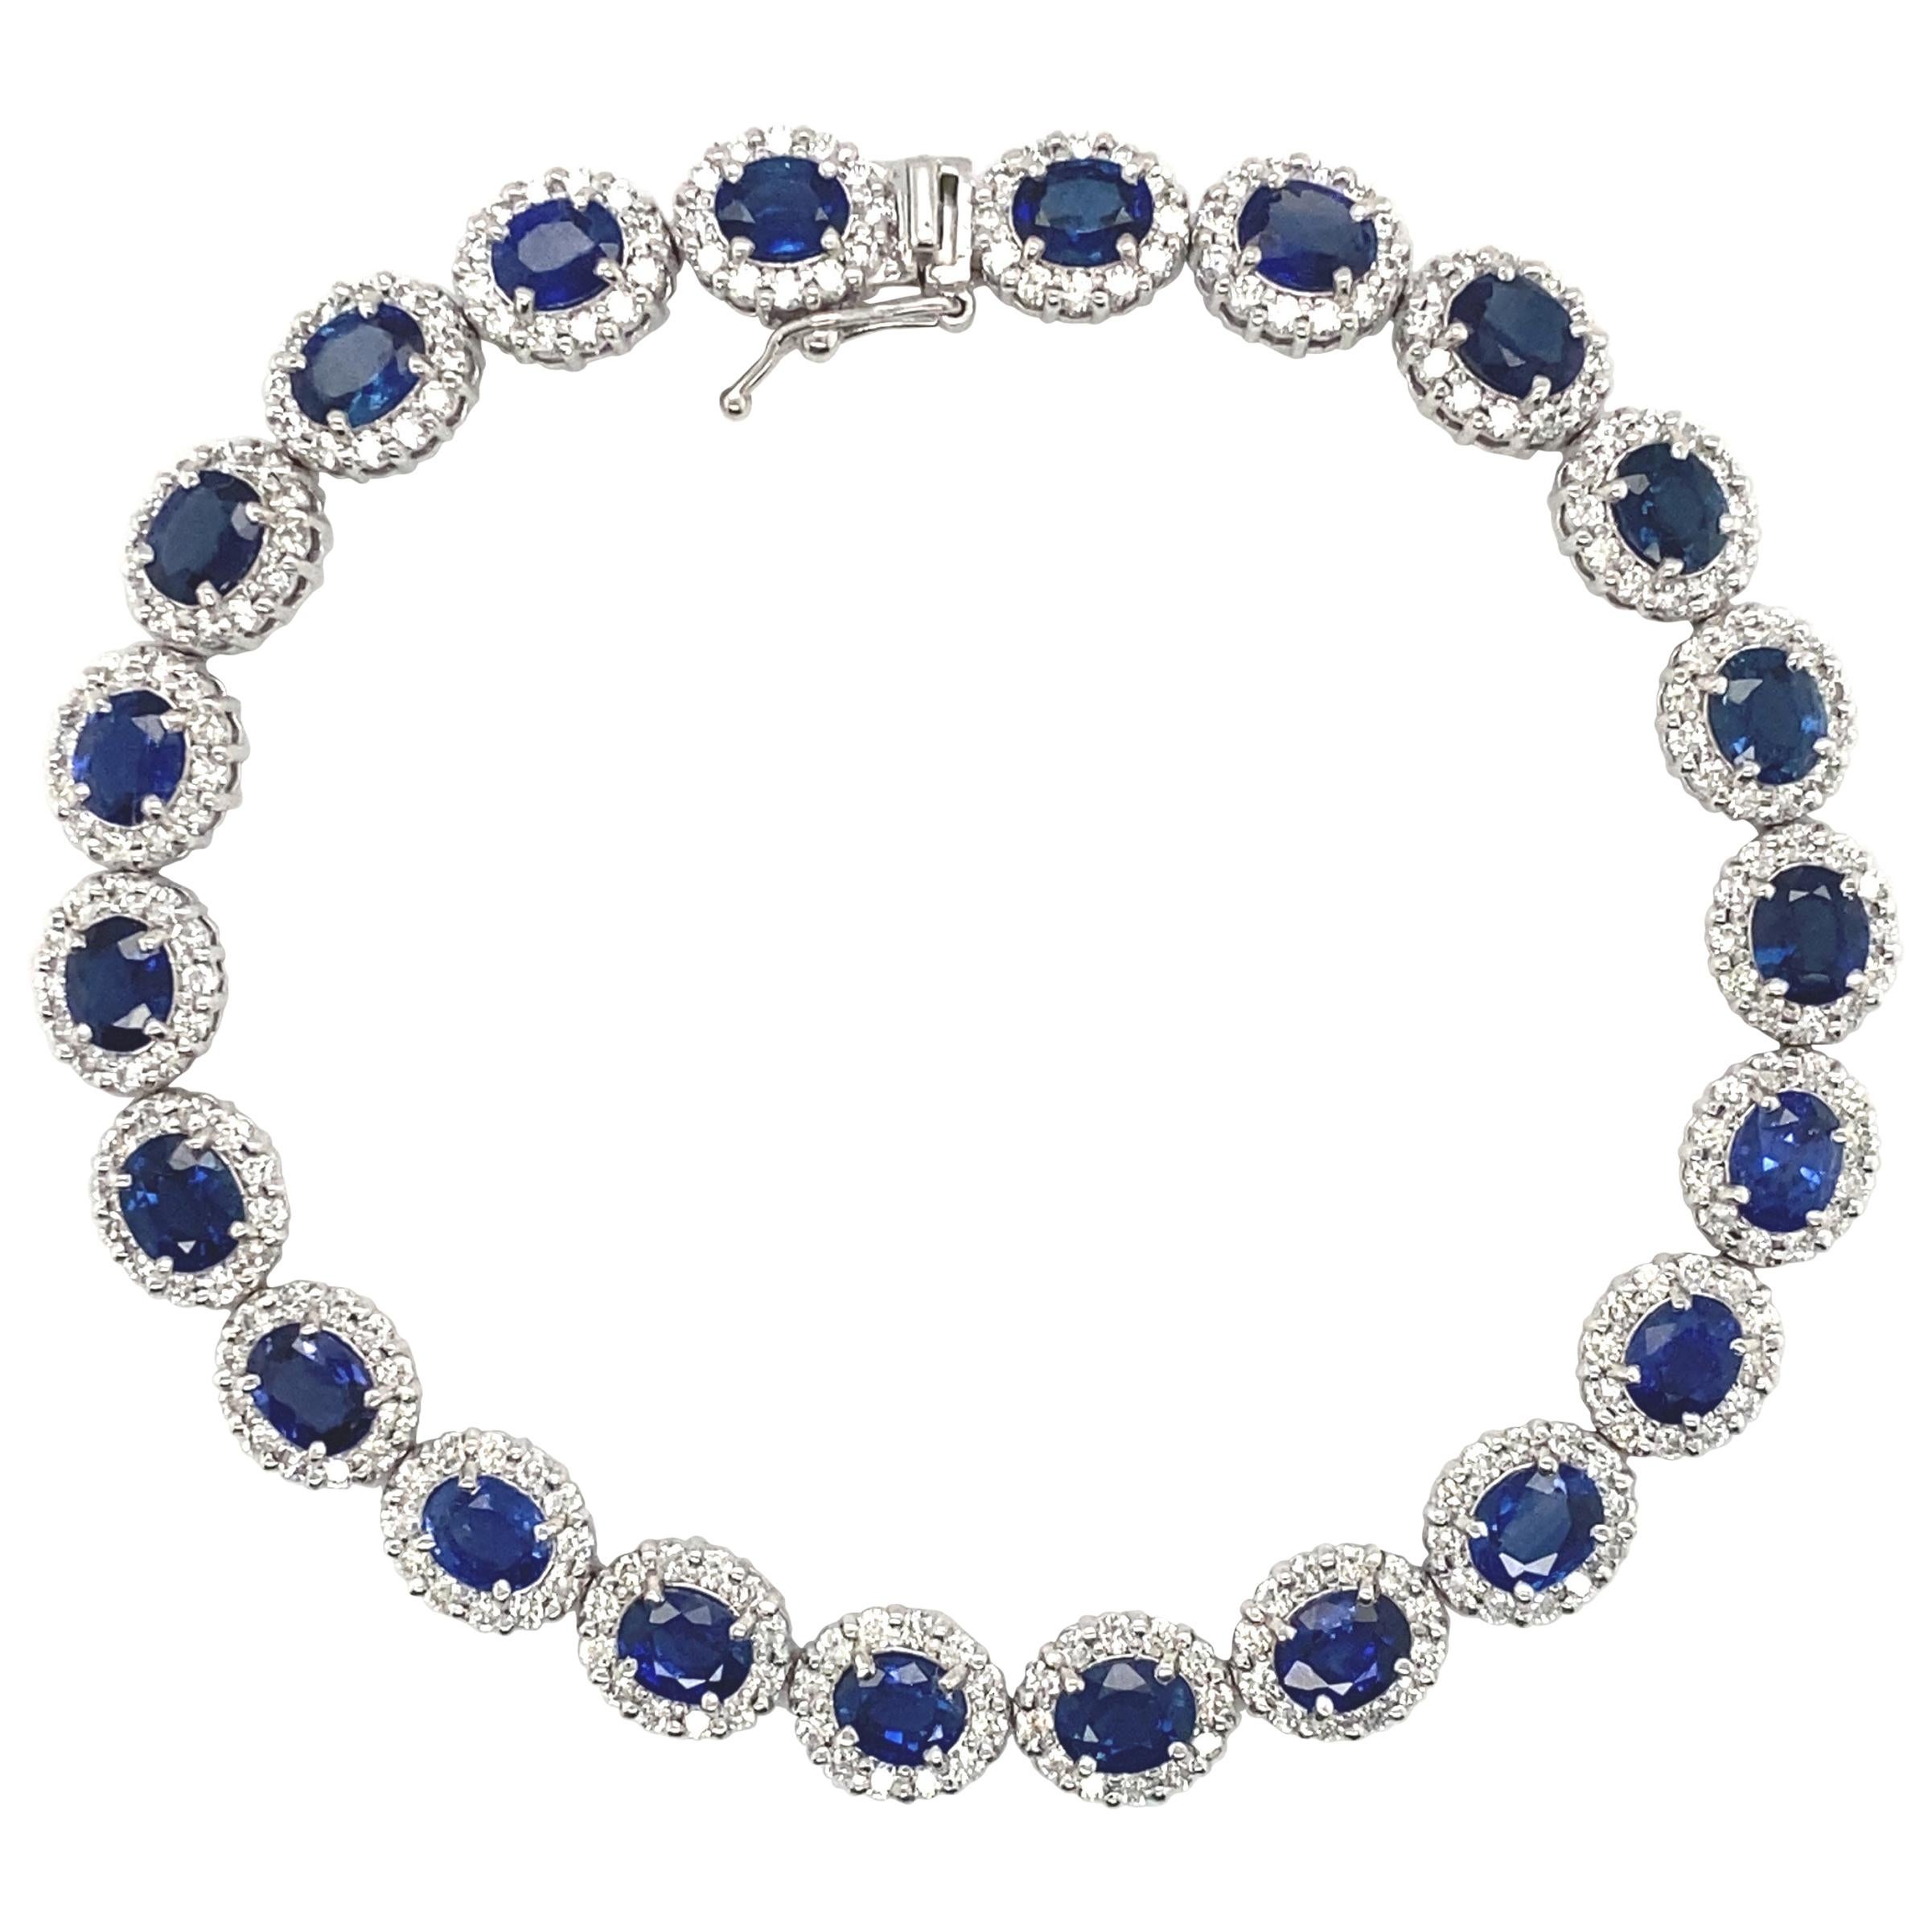 9.77 Carat Natural Sapphire and Diamonds Tennis Bracelet Set in Platinum